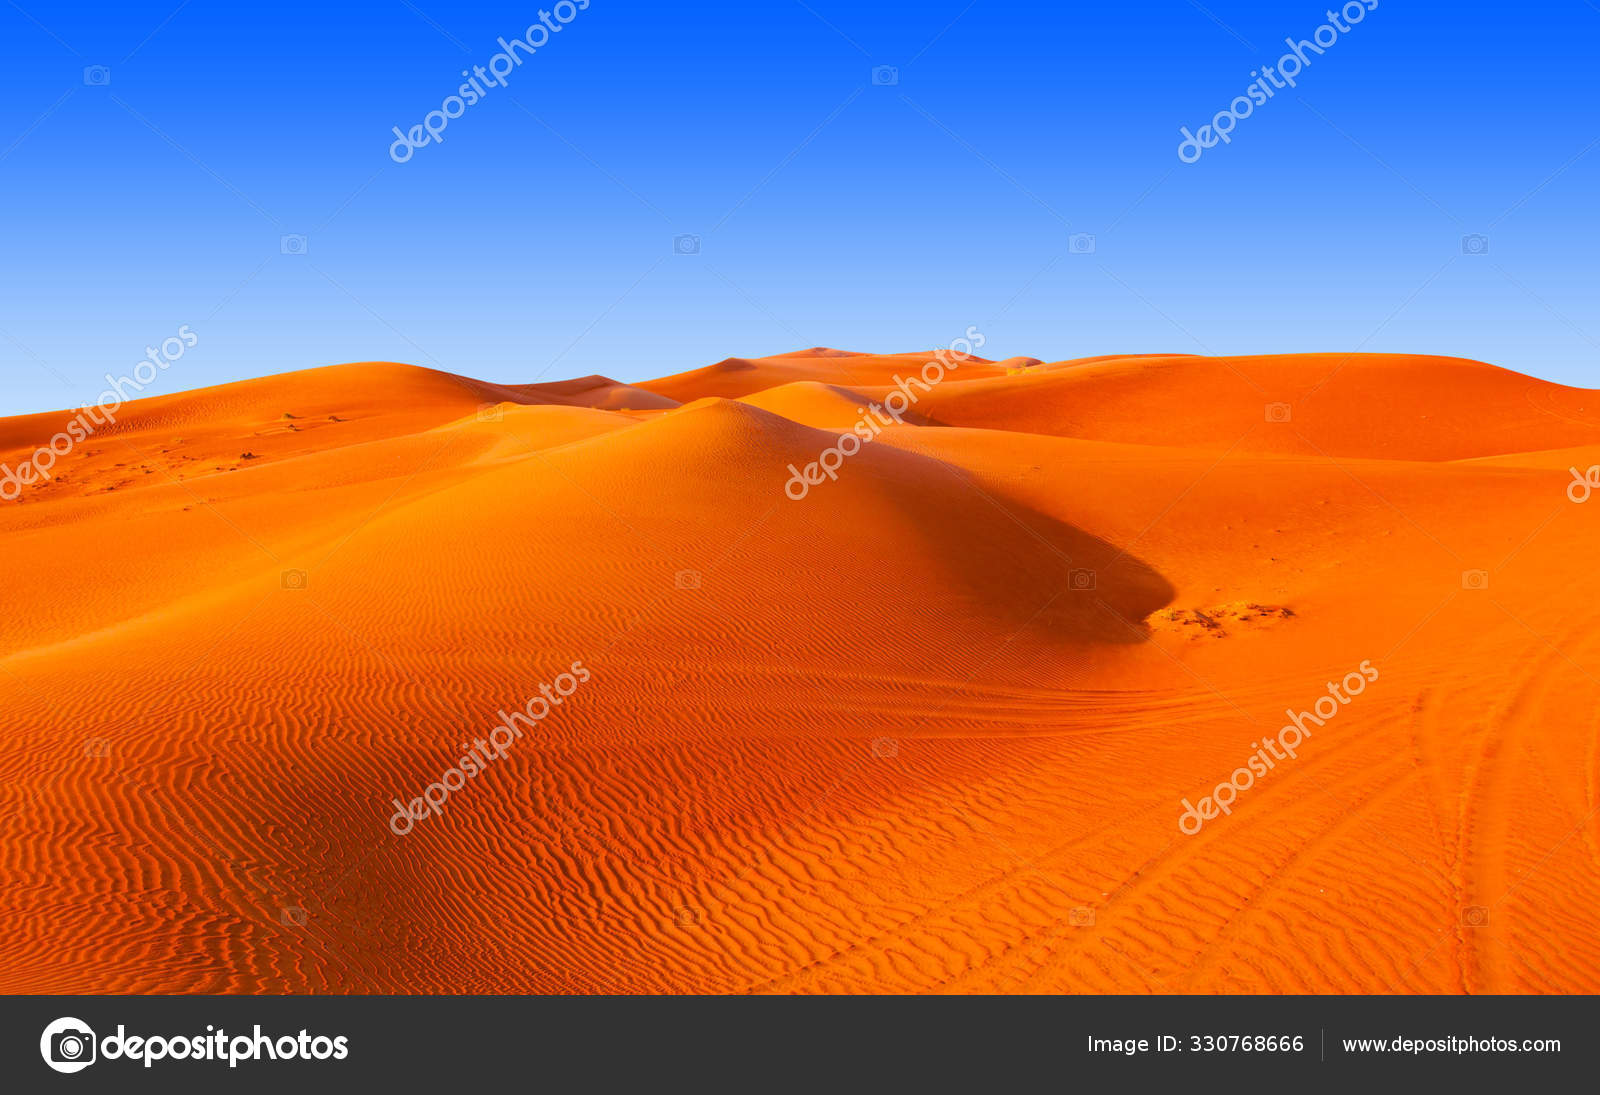 Desert Sand And Dunes Isolated On White Background Stock Photo Image By C Johny007pandp